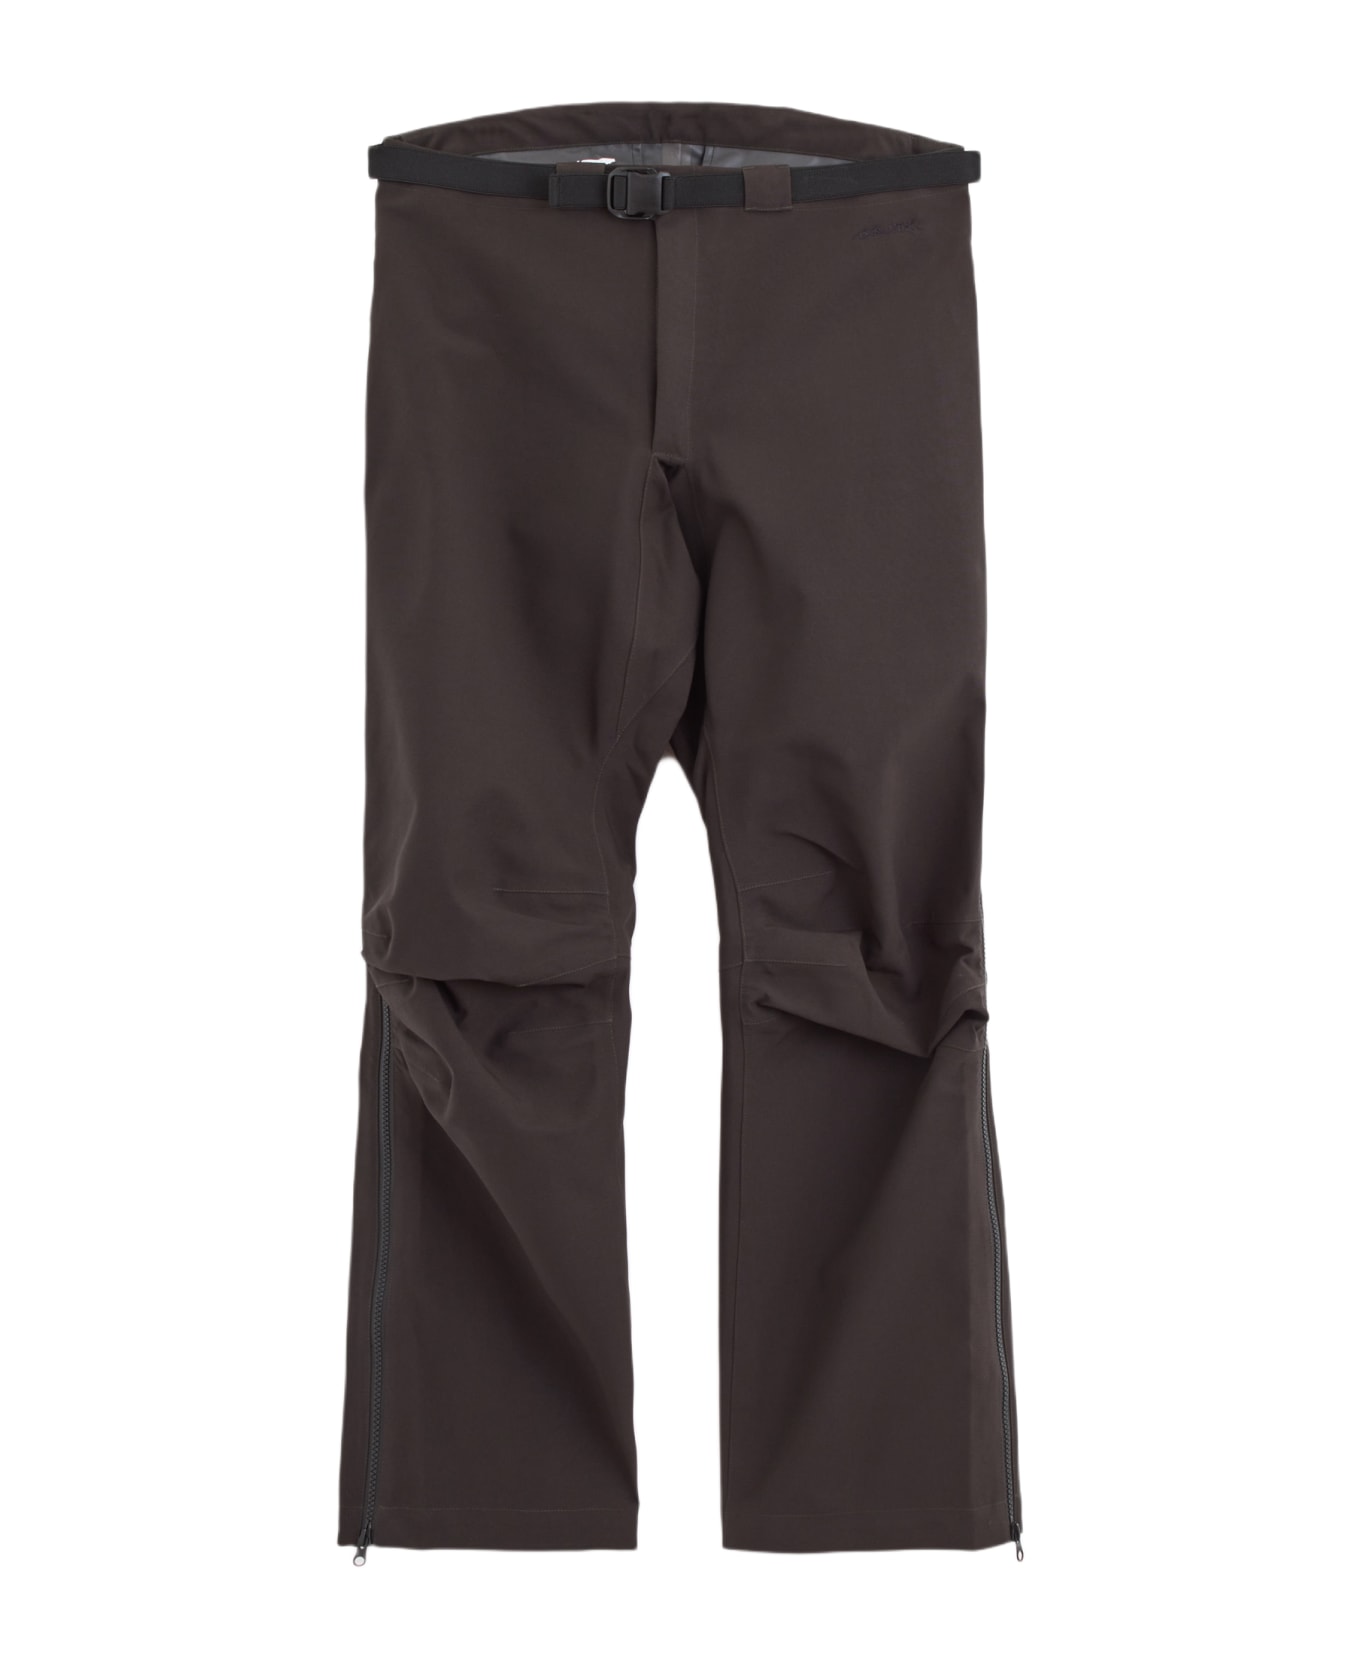 GR10K Bembecula Arc Pants Pants - grey